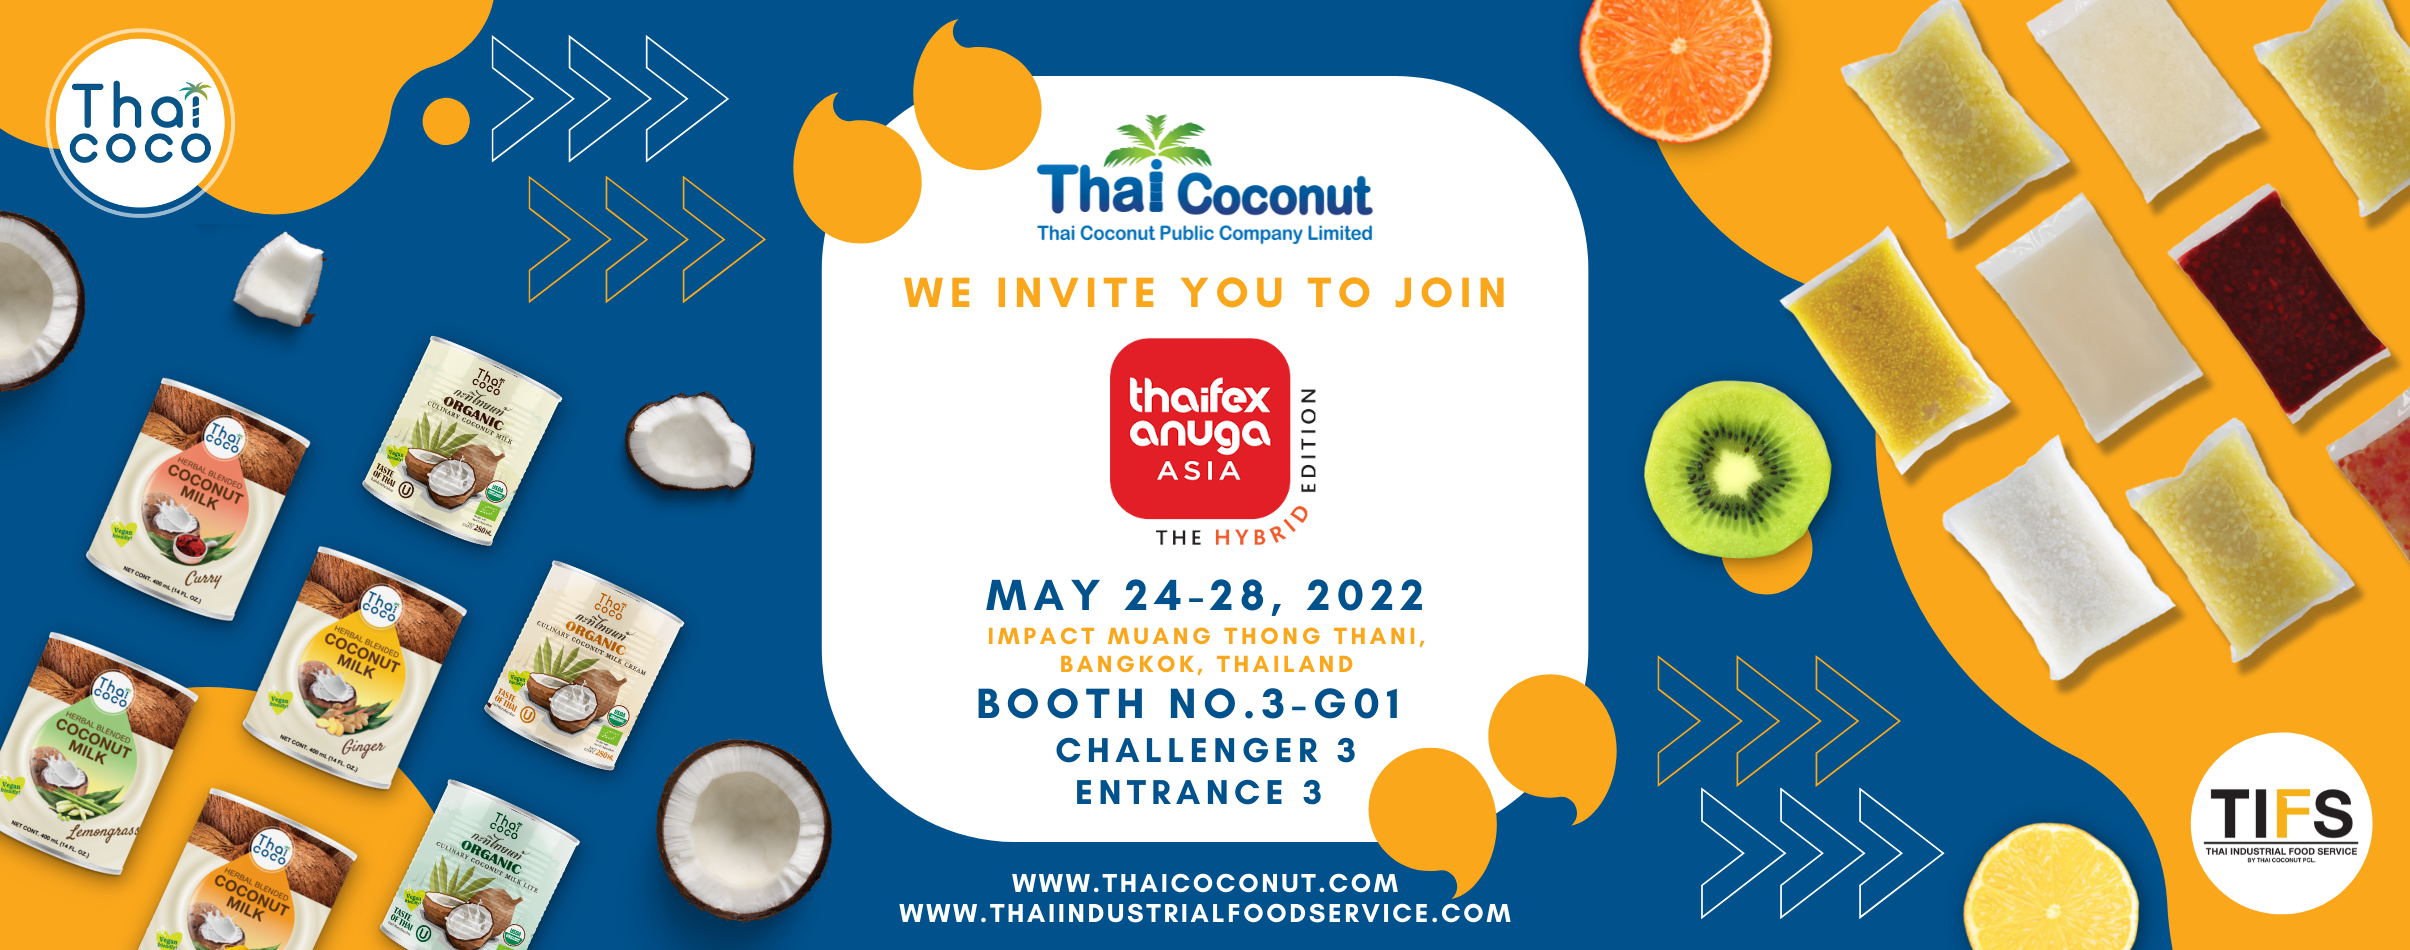 thaicoconut.png